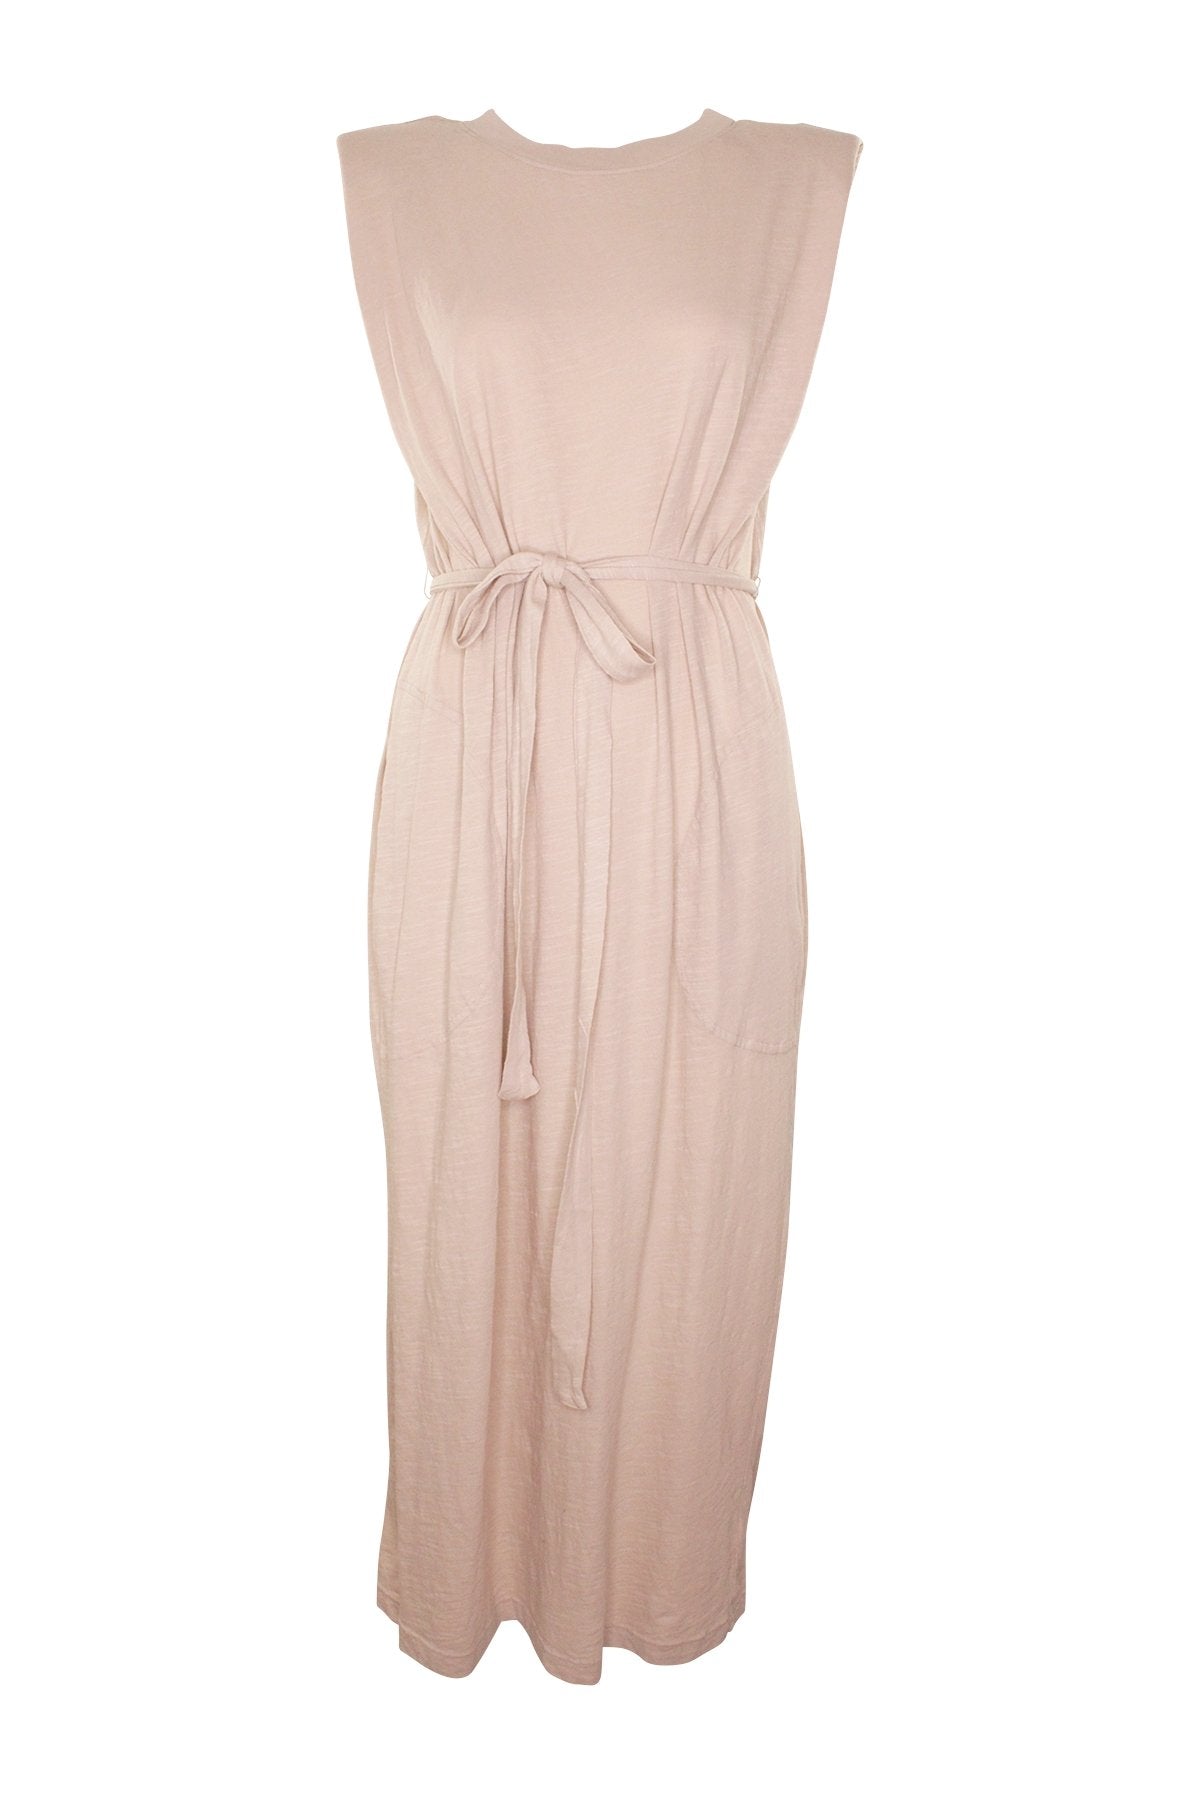 Avis Sleeveless Dress in Brittle - shop-olivia.com